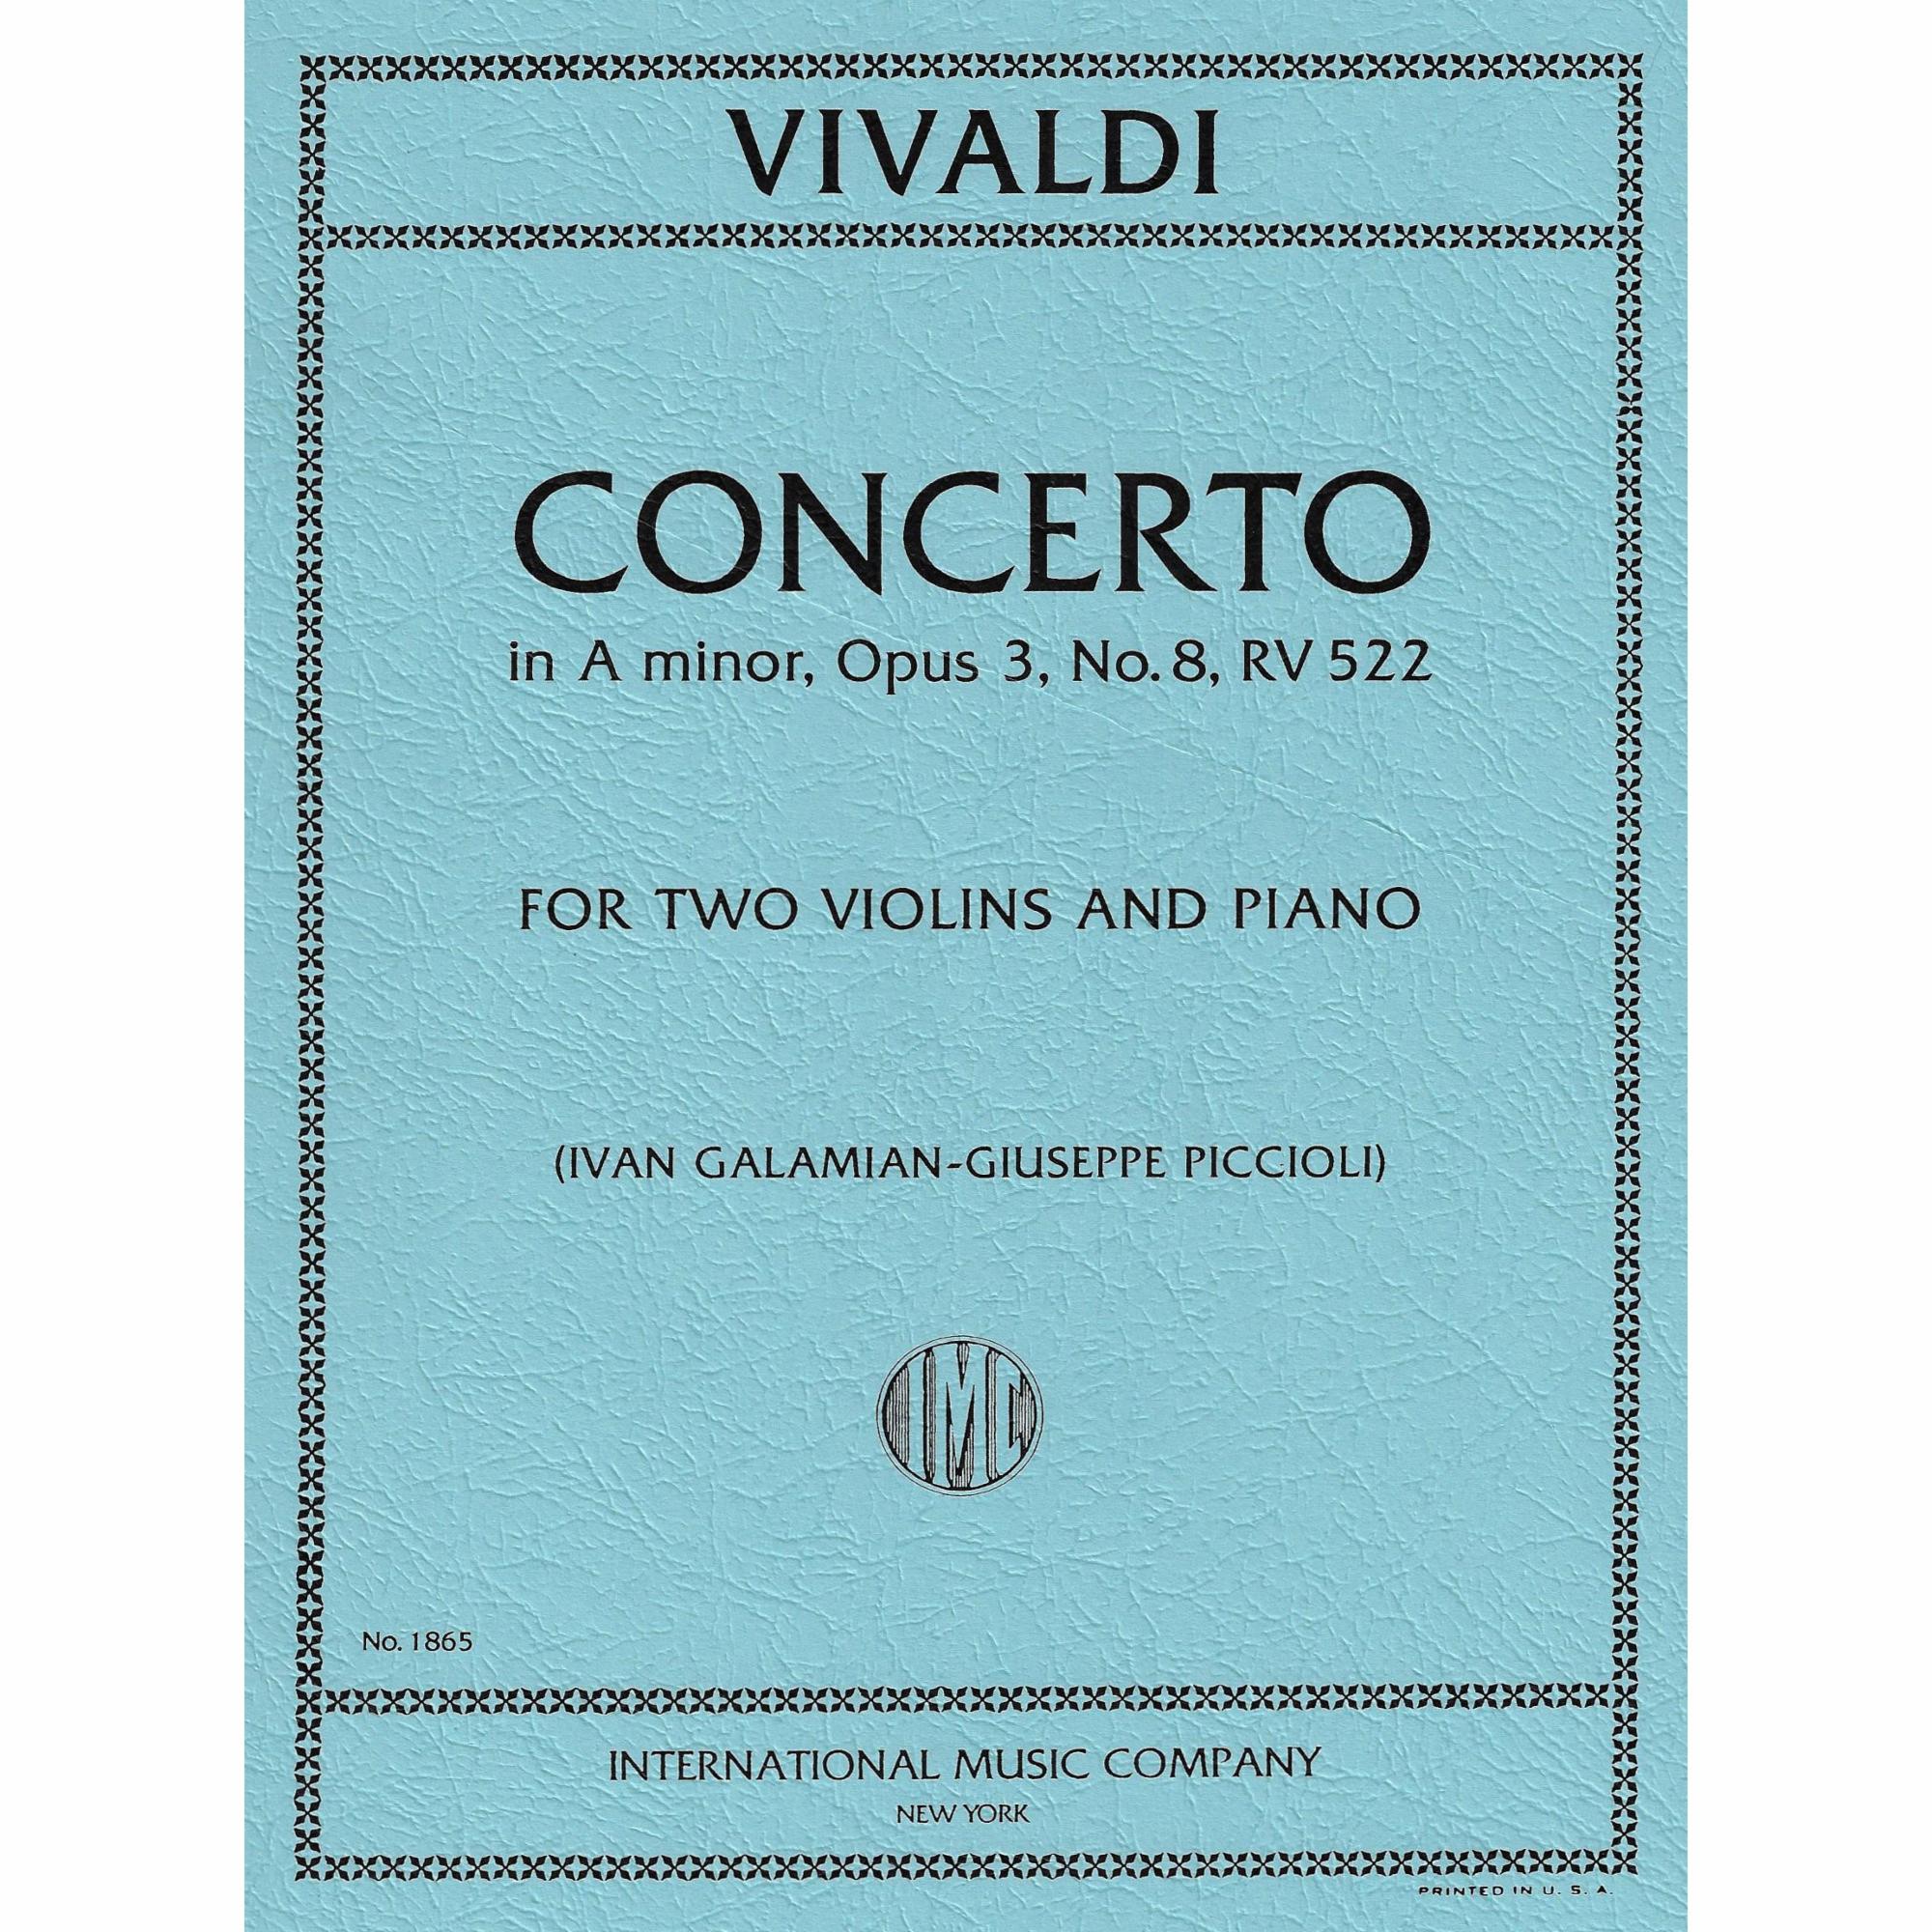 Vivaldi -- Concerto in A Minor, Op. 3, No. 8 for Two Violins and Piano